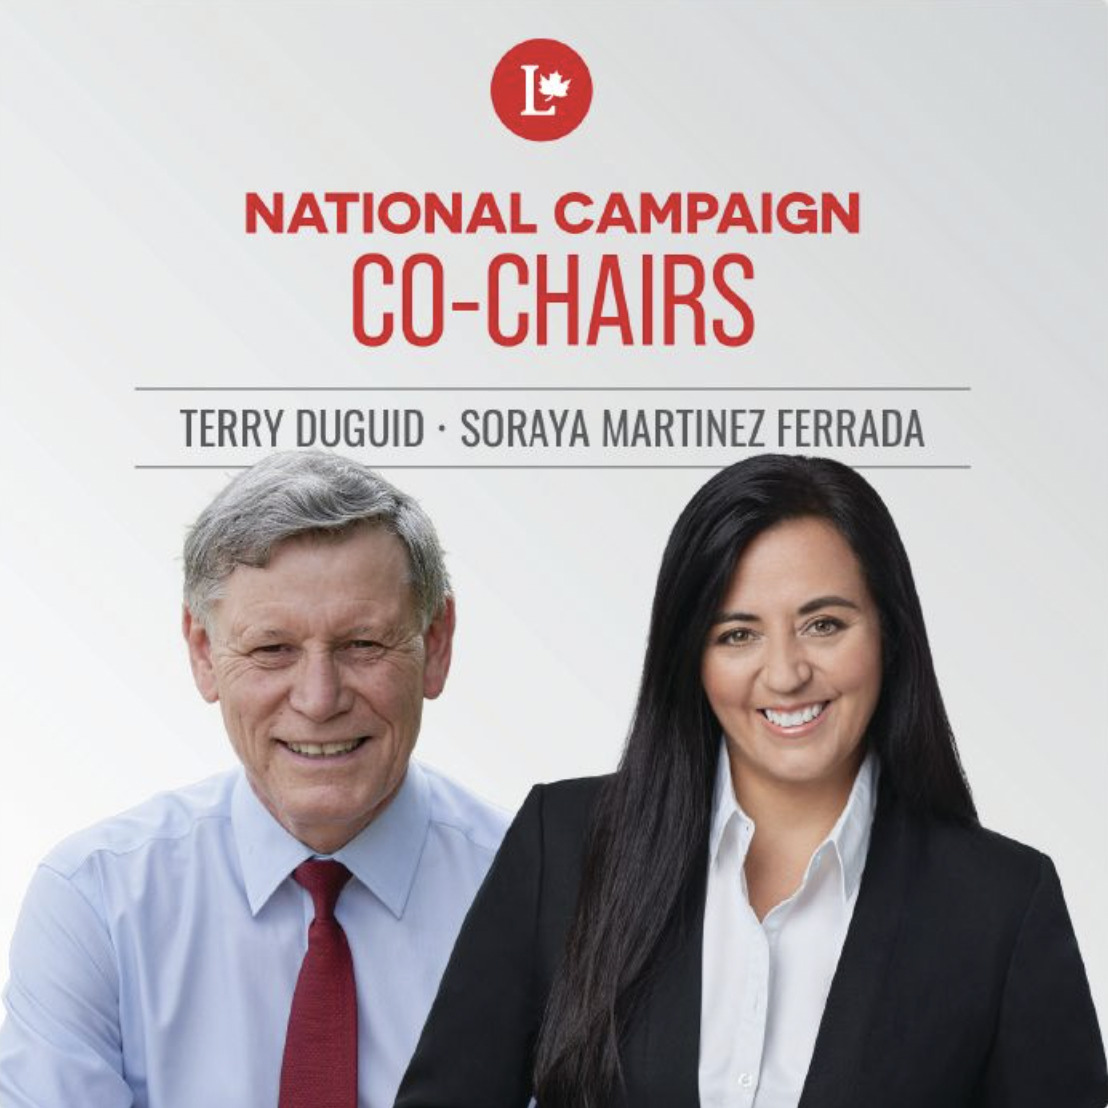 National campaign co-chairs: Terry Duguid and Soraya Martinez Ferrada